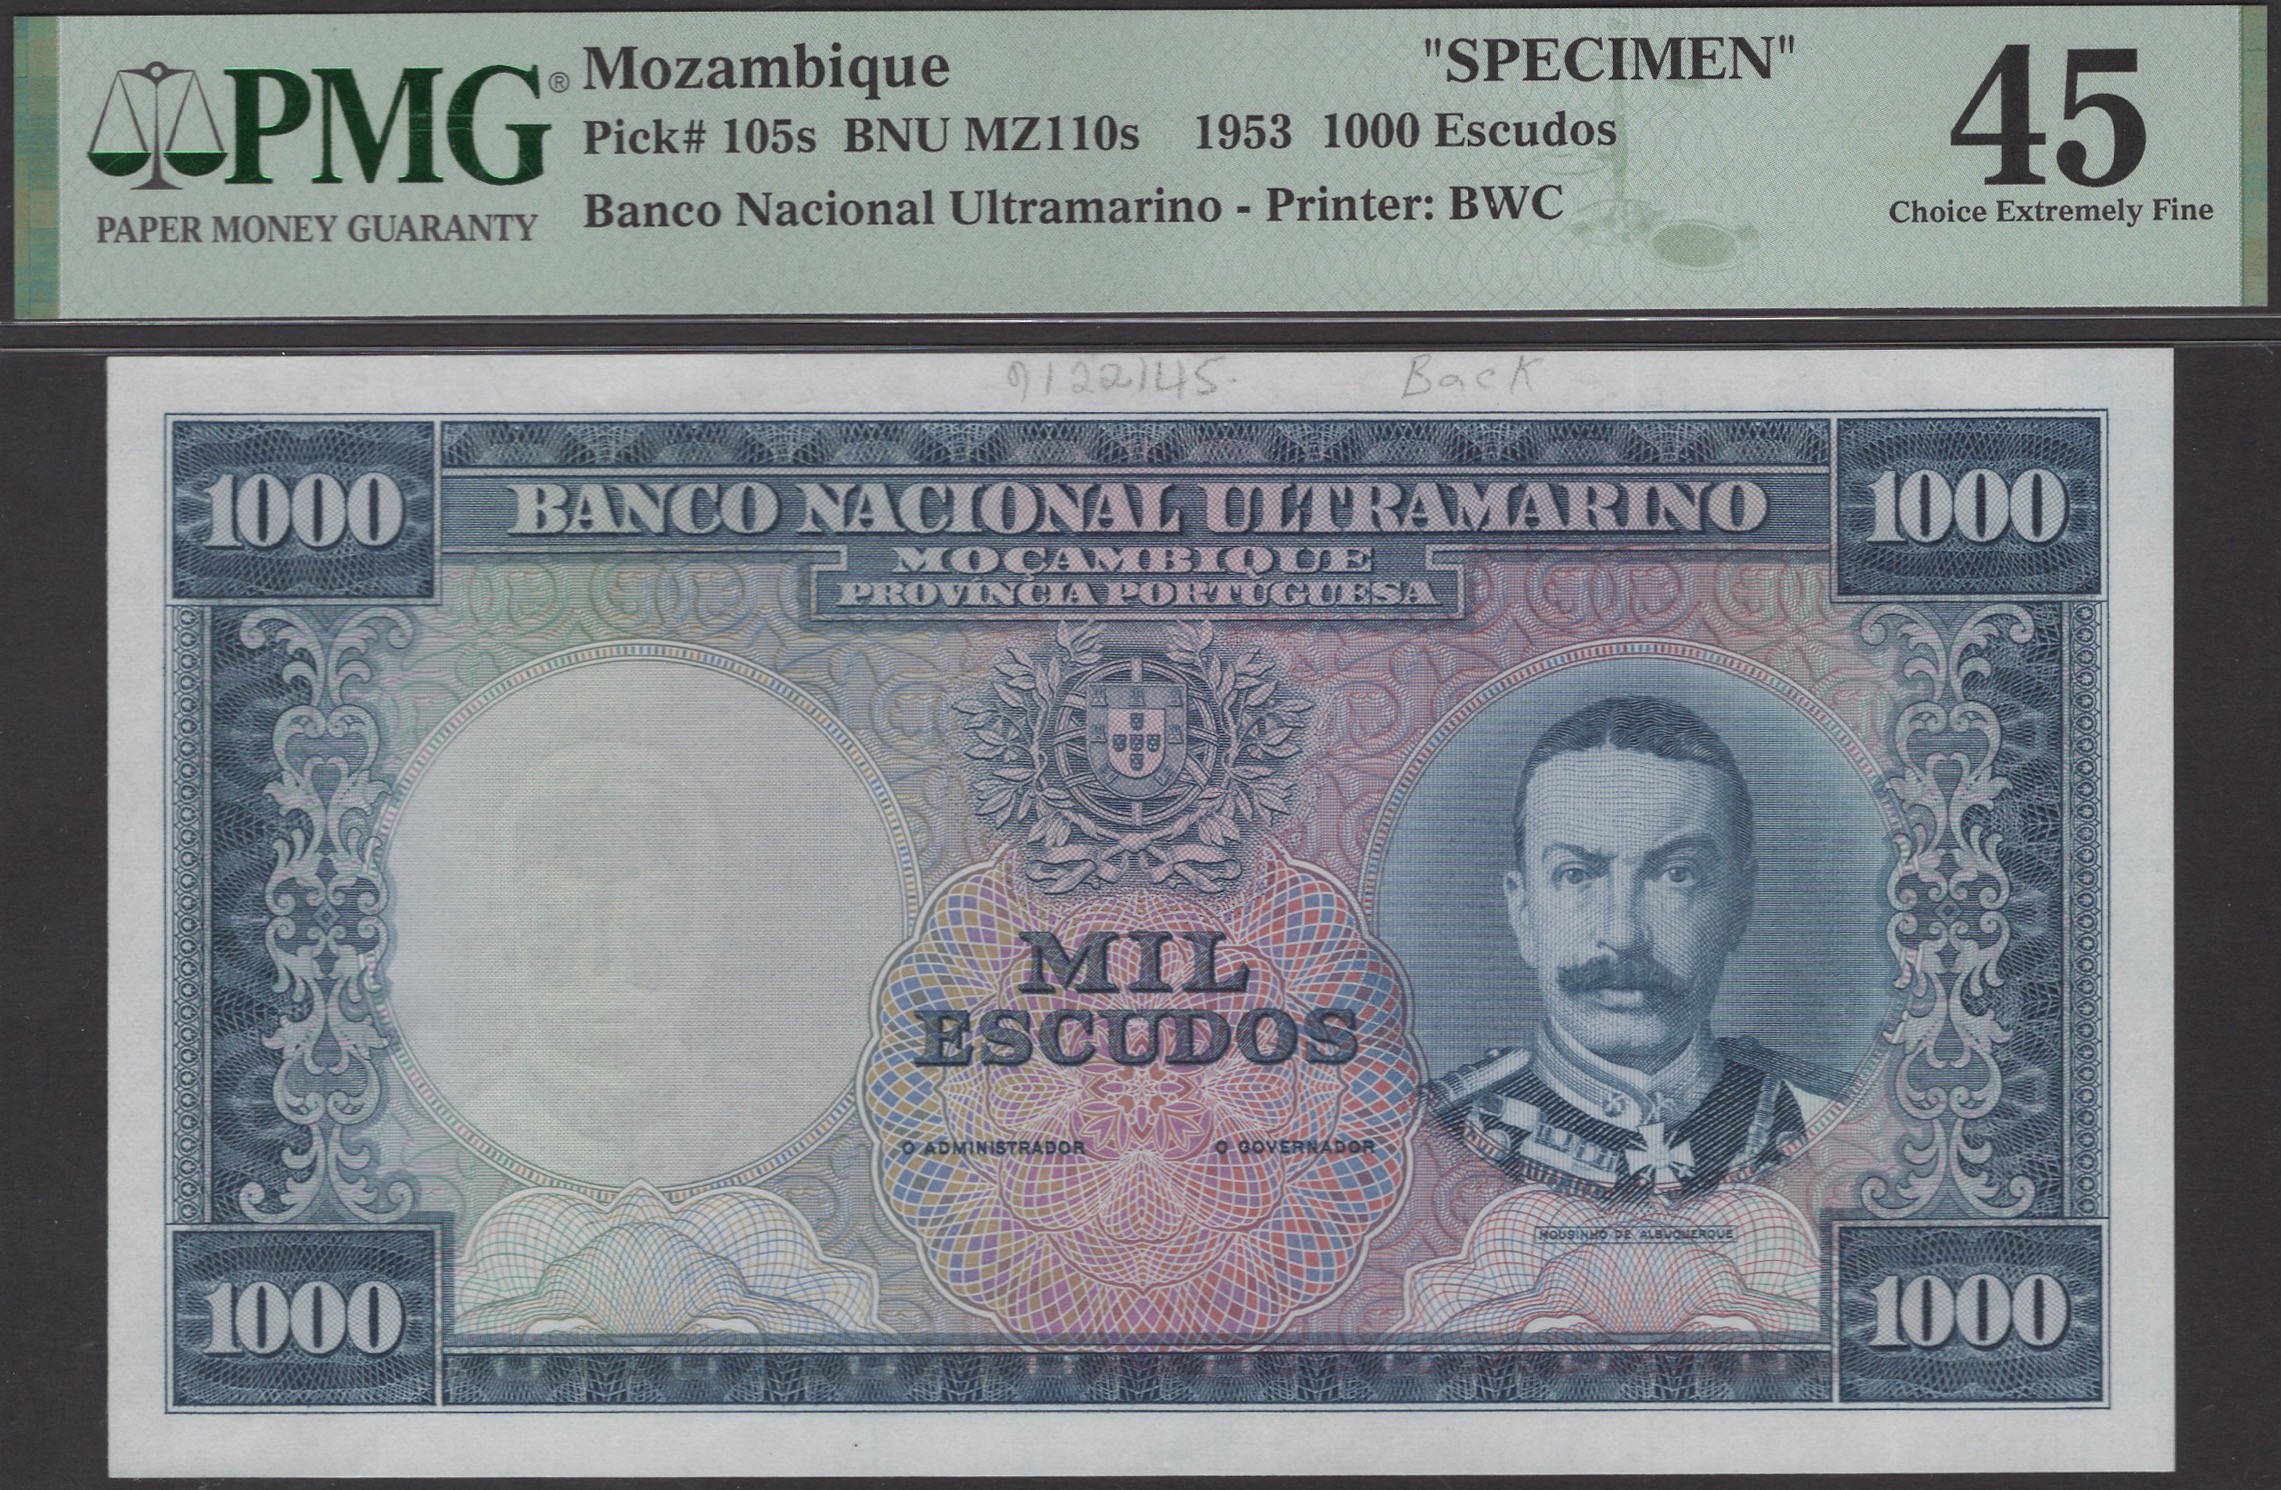 Banco Nacional Ultramarino, Mozambique, proof 1000 Escudos, ND (1967), no serial numbers or...